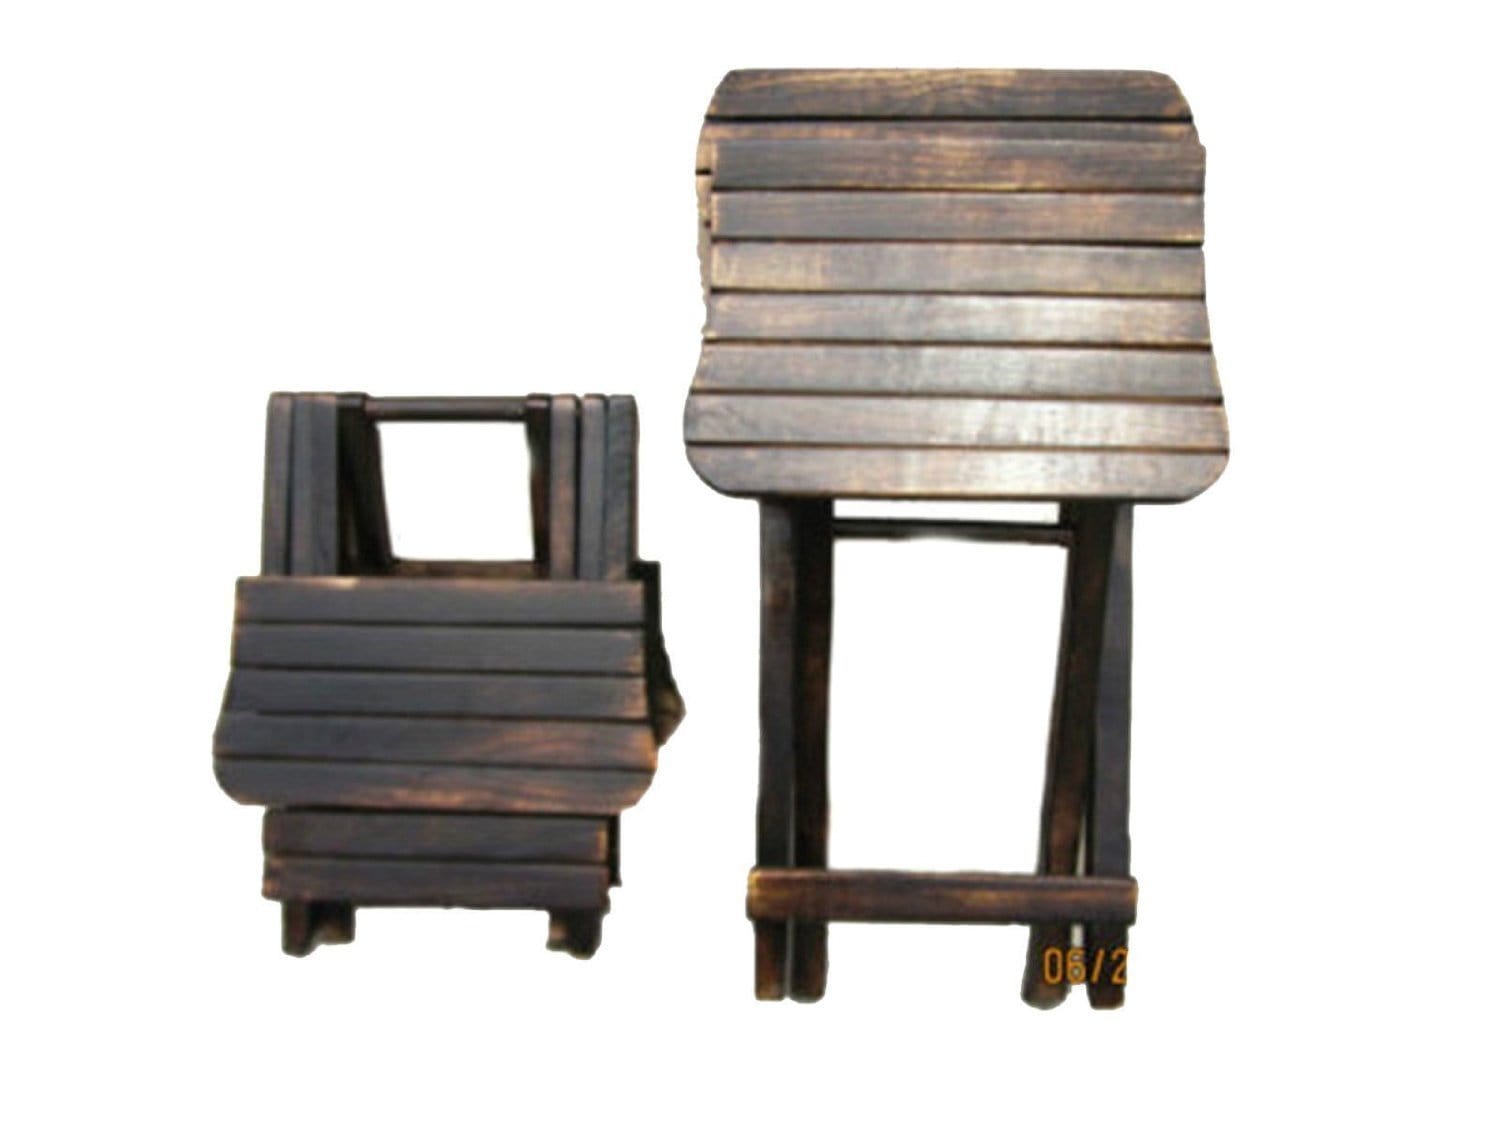 Antique Child's Wooden Folding Table & Chair Set